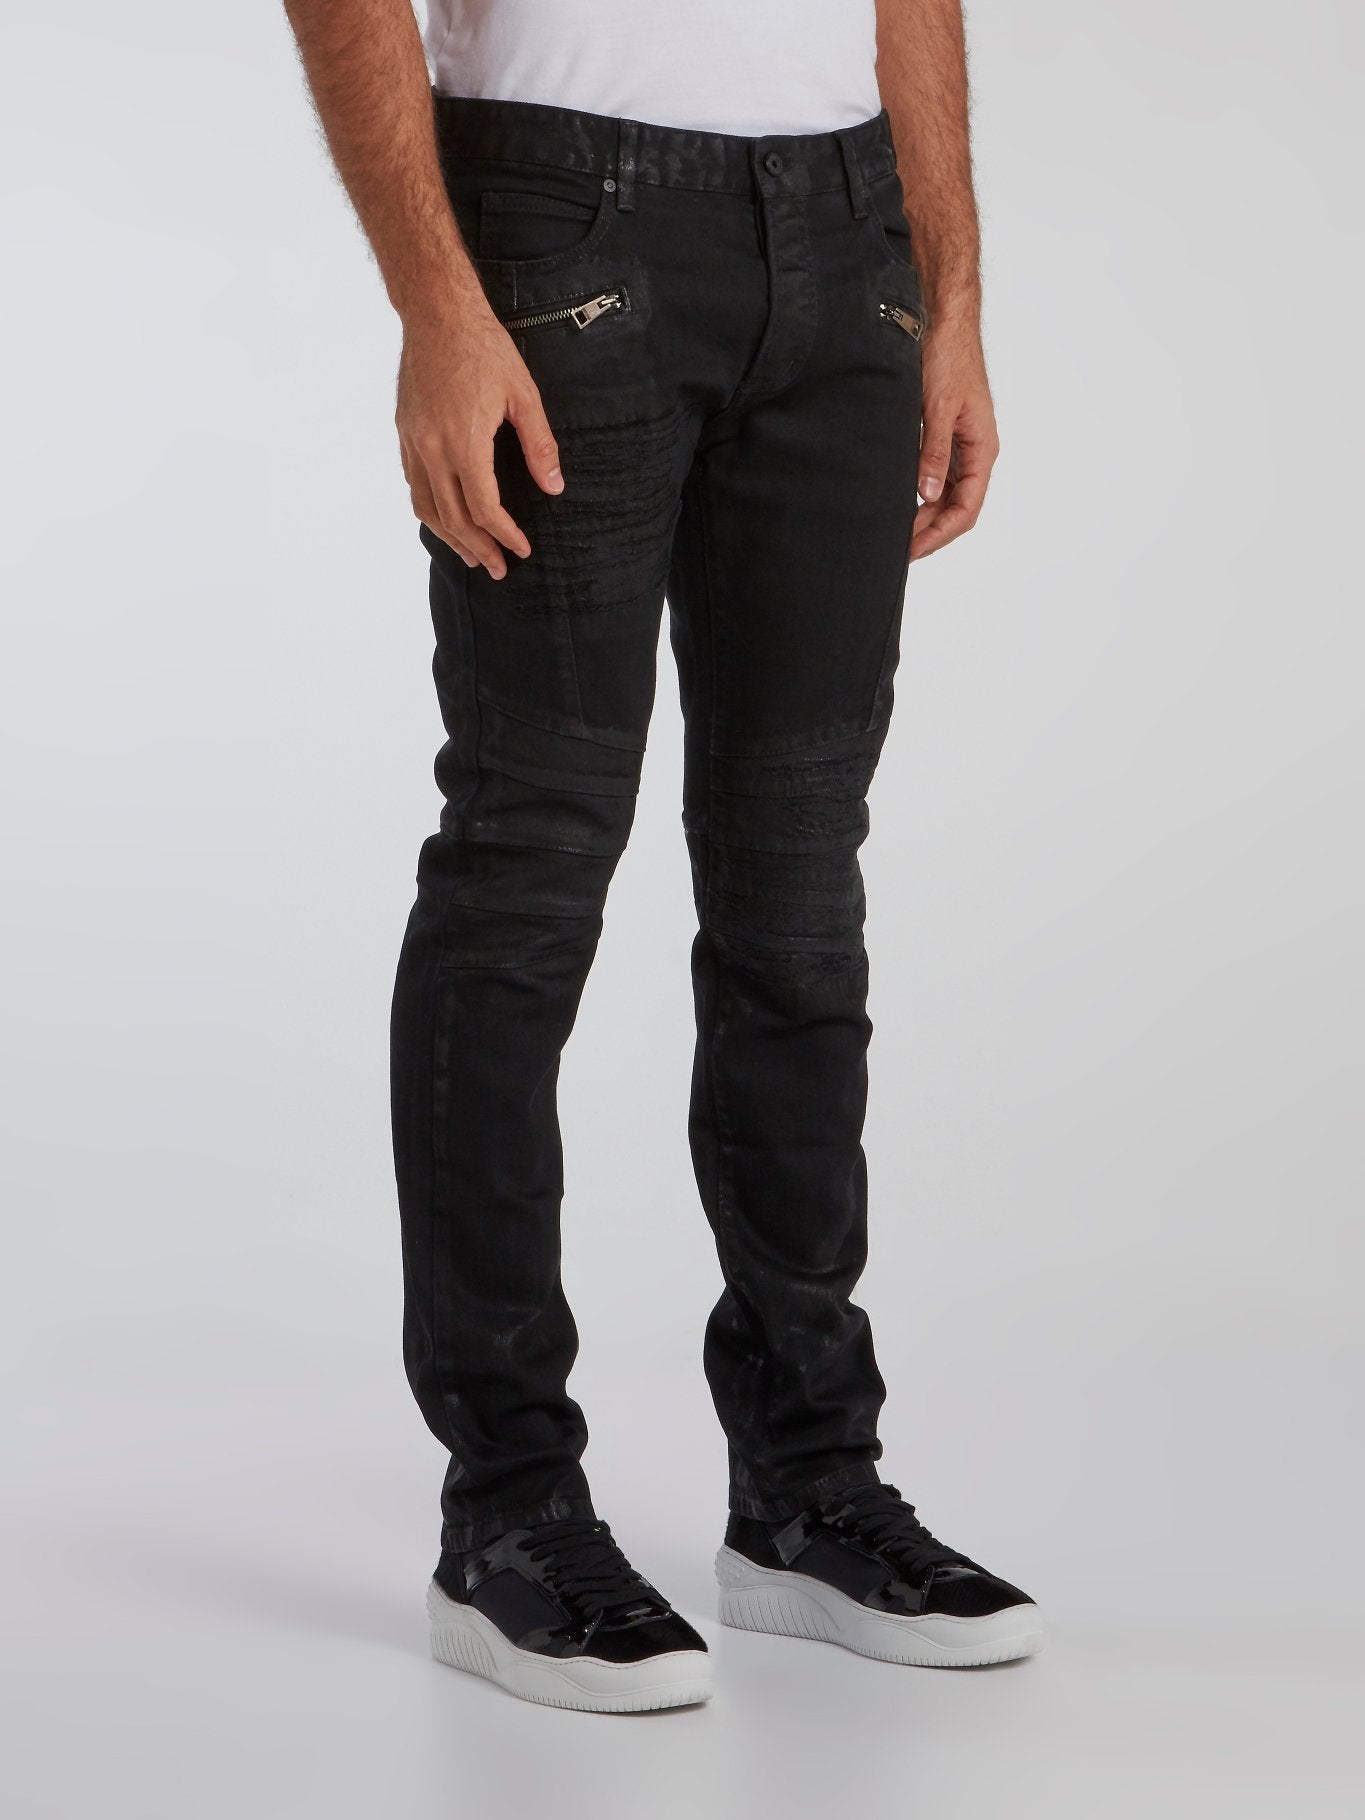 Black Distressed Zip Pocket Jeans